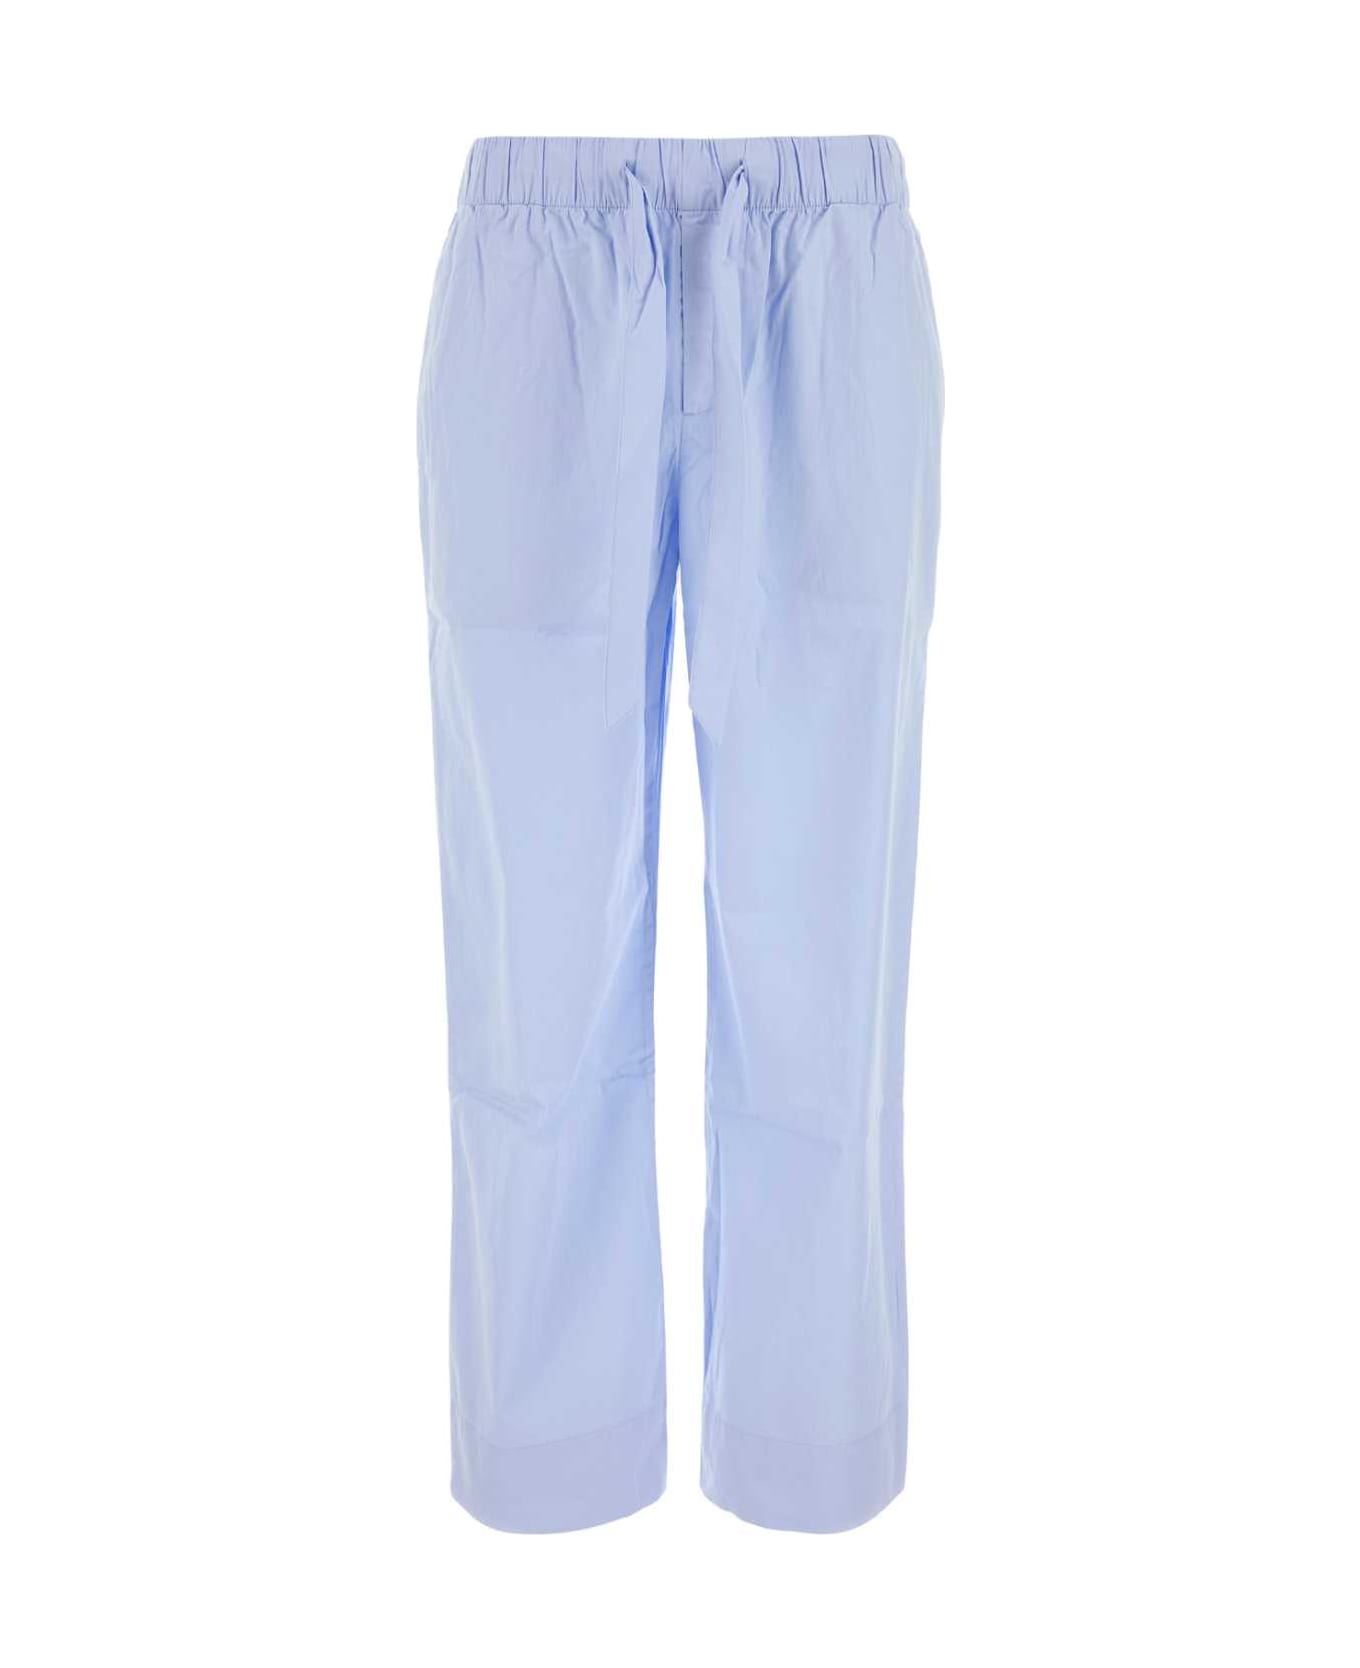 Tekla Light Blue Cotton Pyjama Pant - SHIRTBLUE